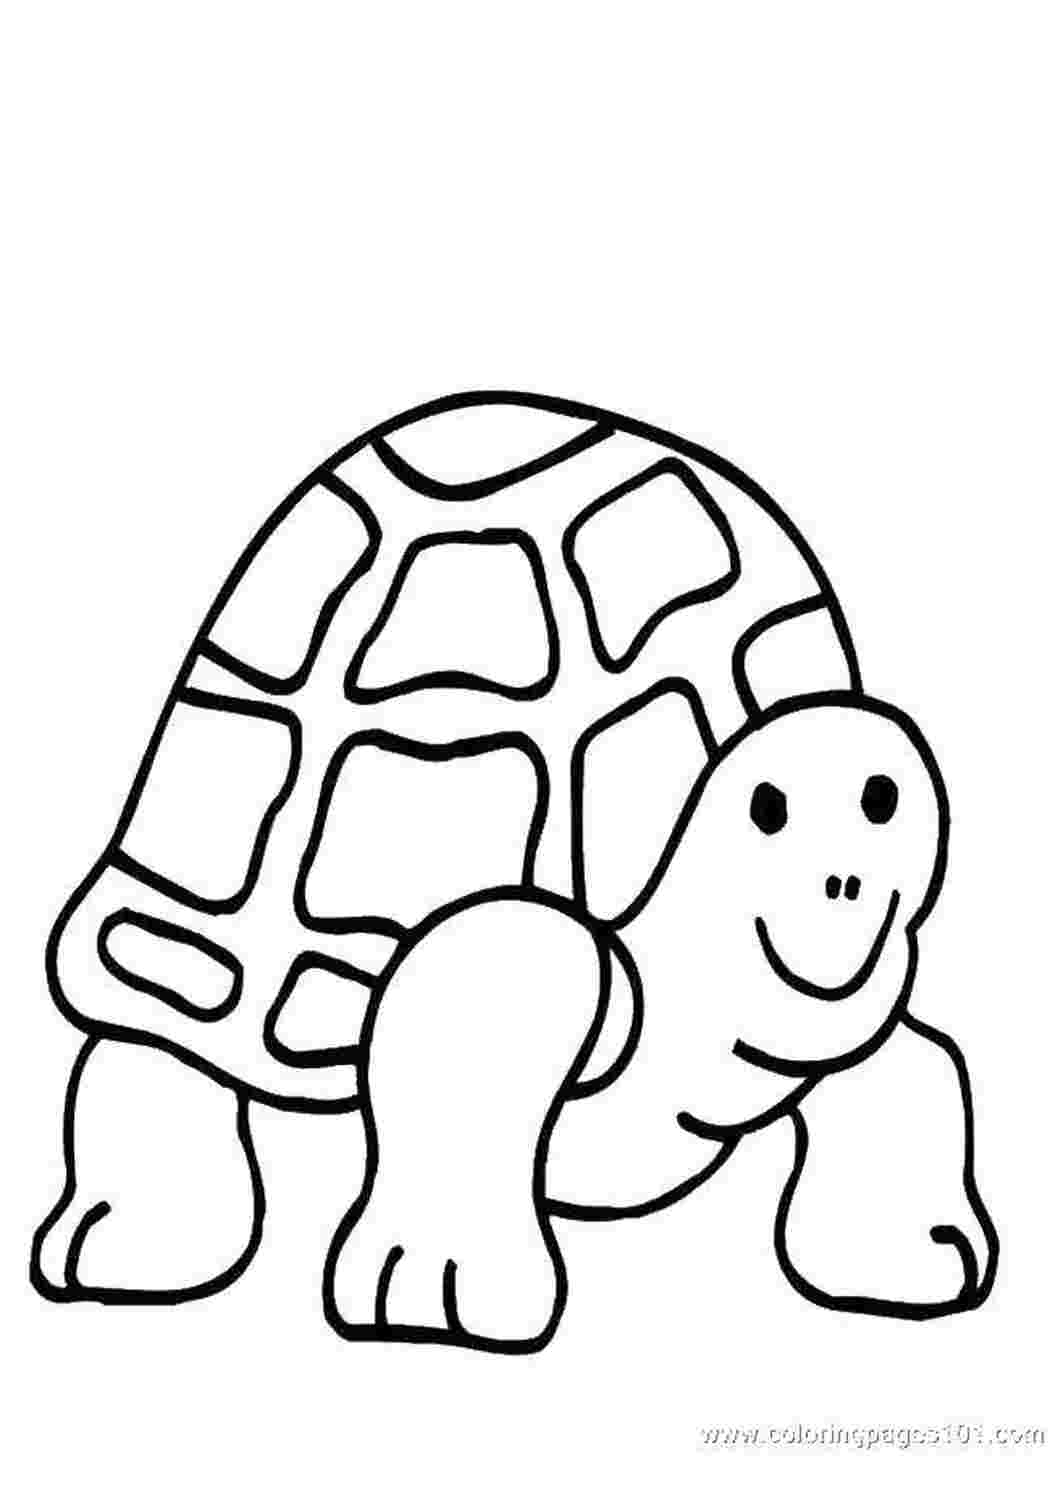 Раскраска Turtle for Kids